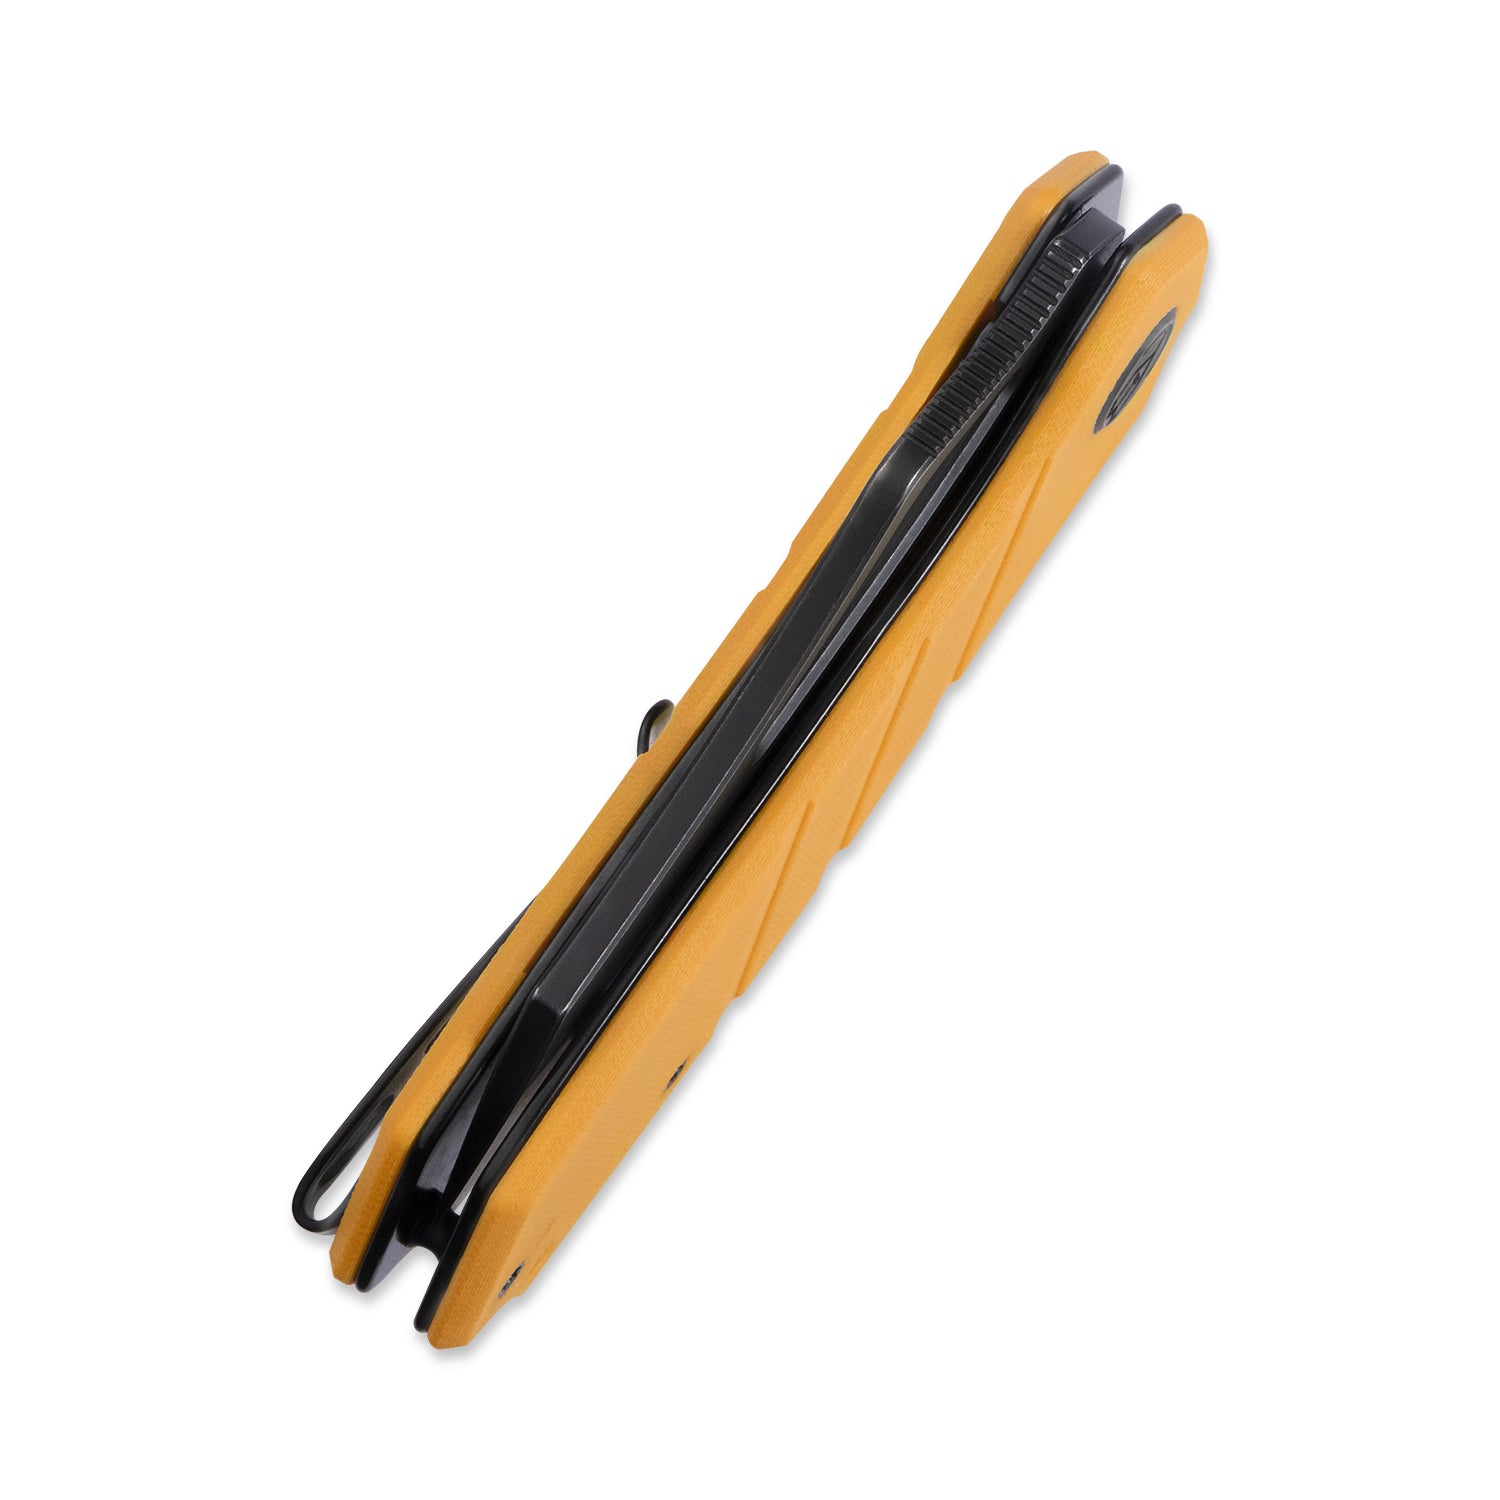 Kubey Ceyx Liner Lock Flipper Folding Knife Yellow G10 Handle 2.95" Darkwashed D2 KU335C